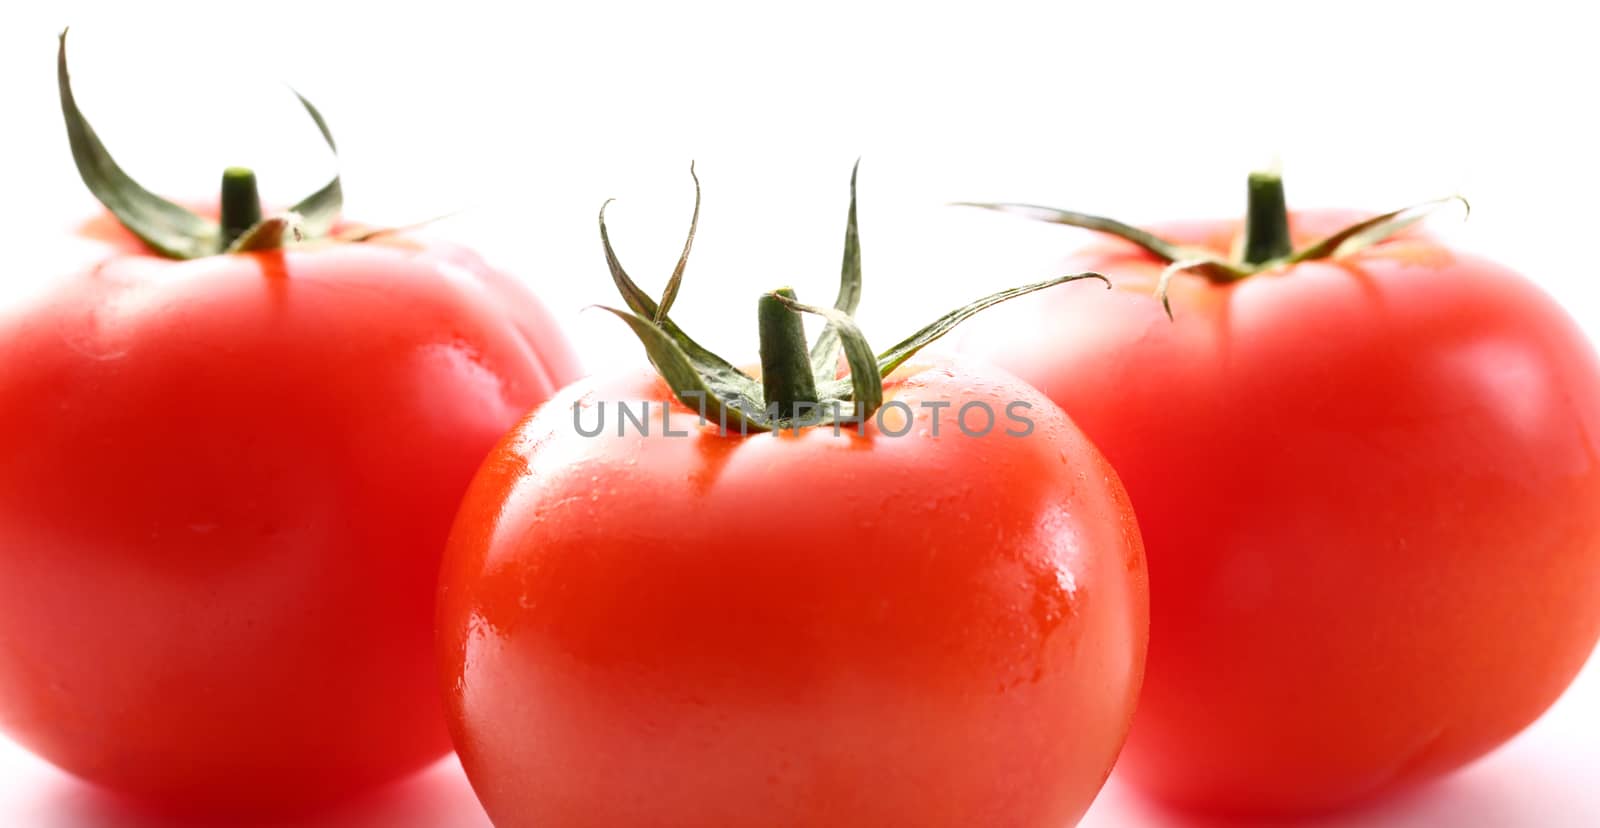 Tomatoes on the white background by Garsya